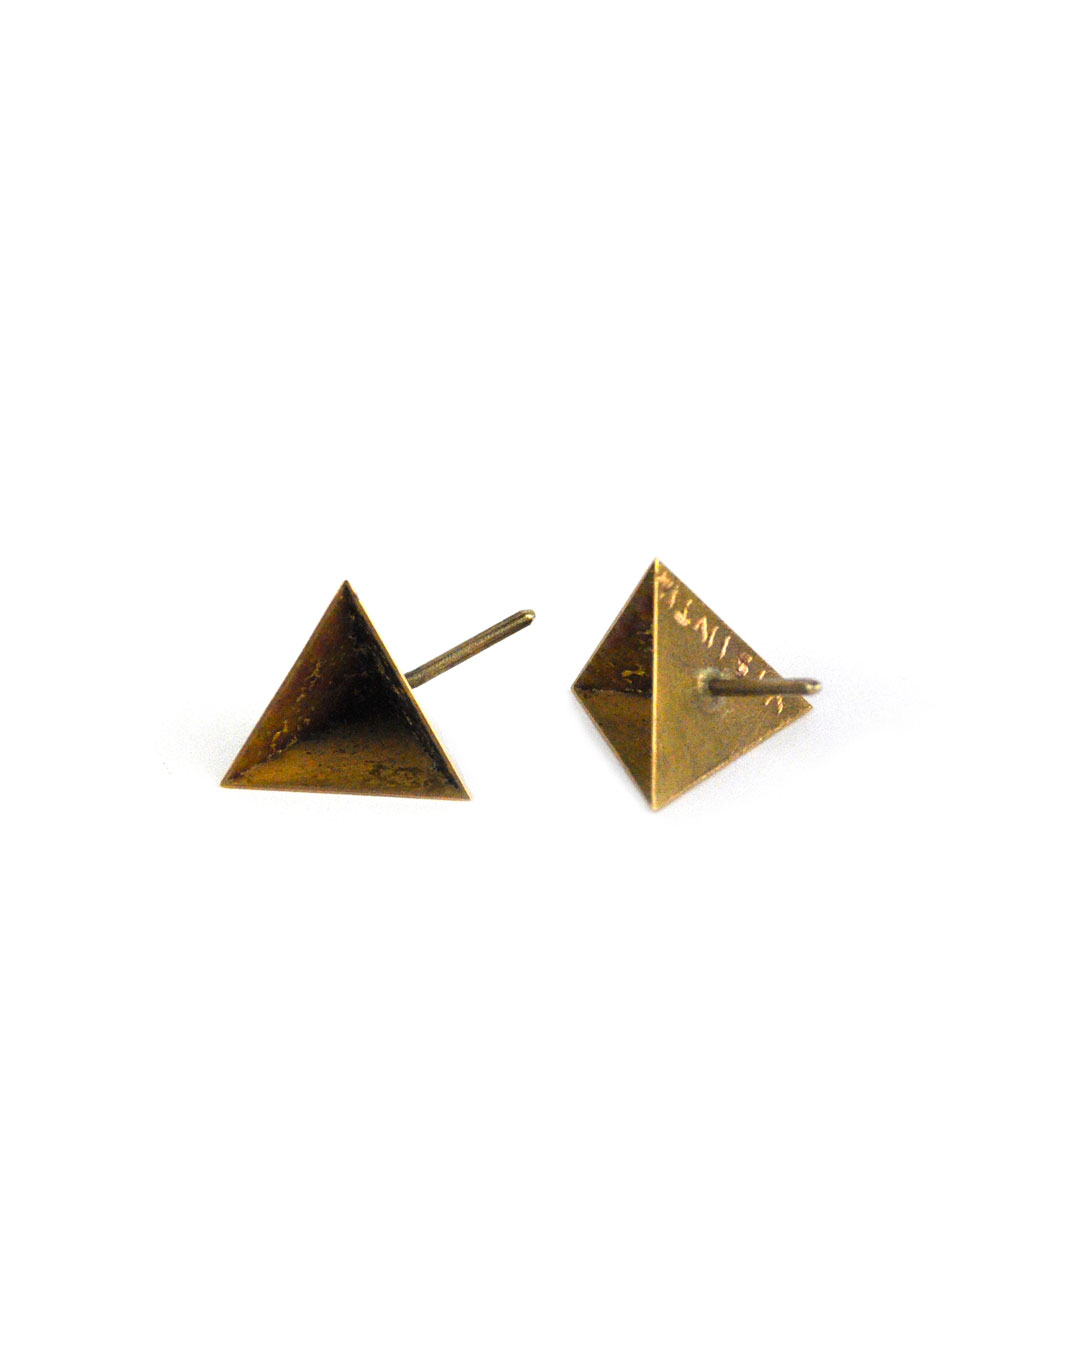 Graziano Visintin, untitled, 2010, earrings; gold, enamel, gold leaf, 7 x 7 x 7 mm, €3630